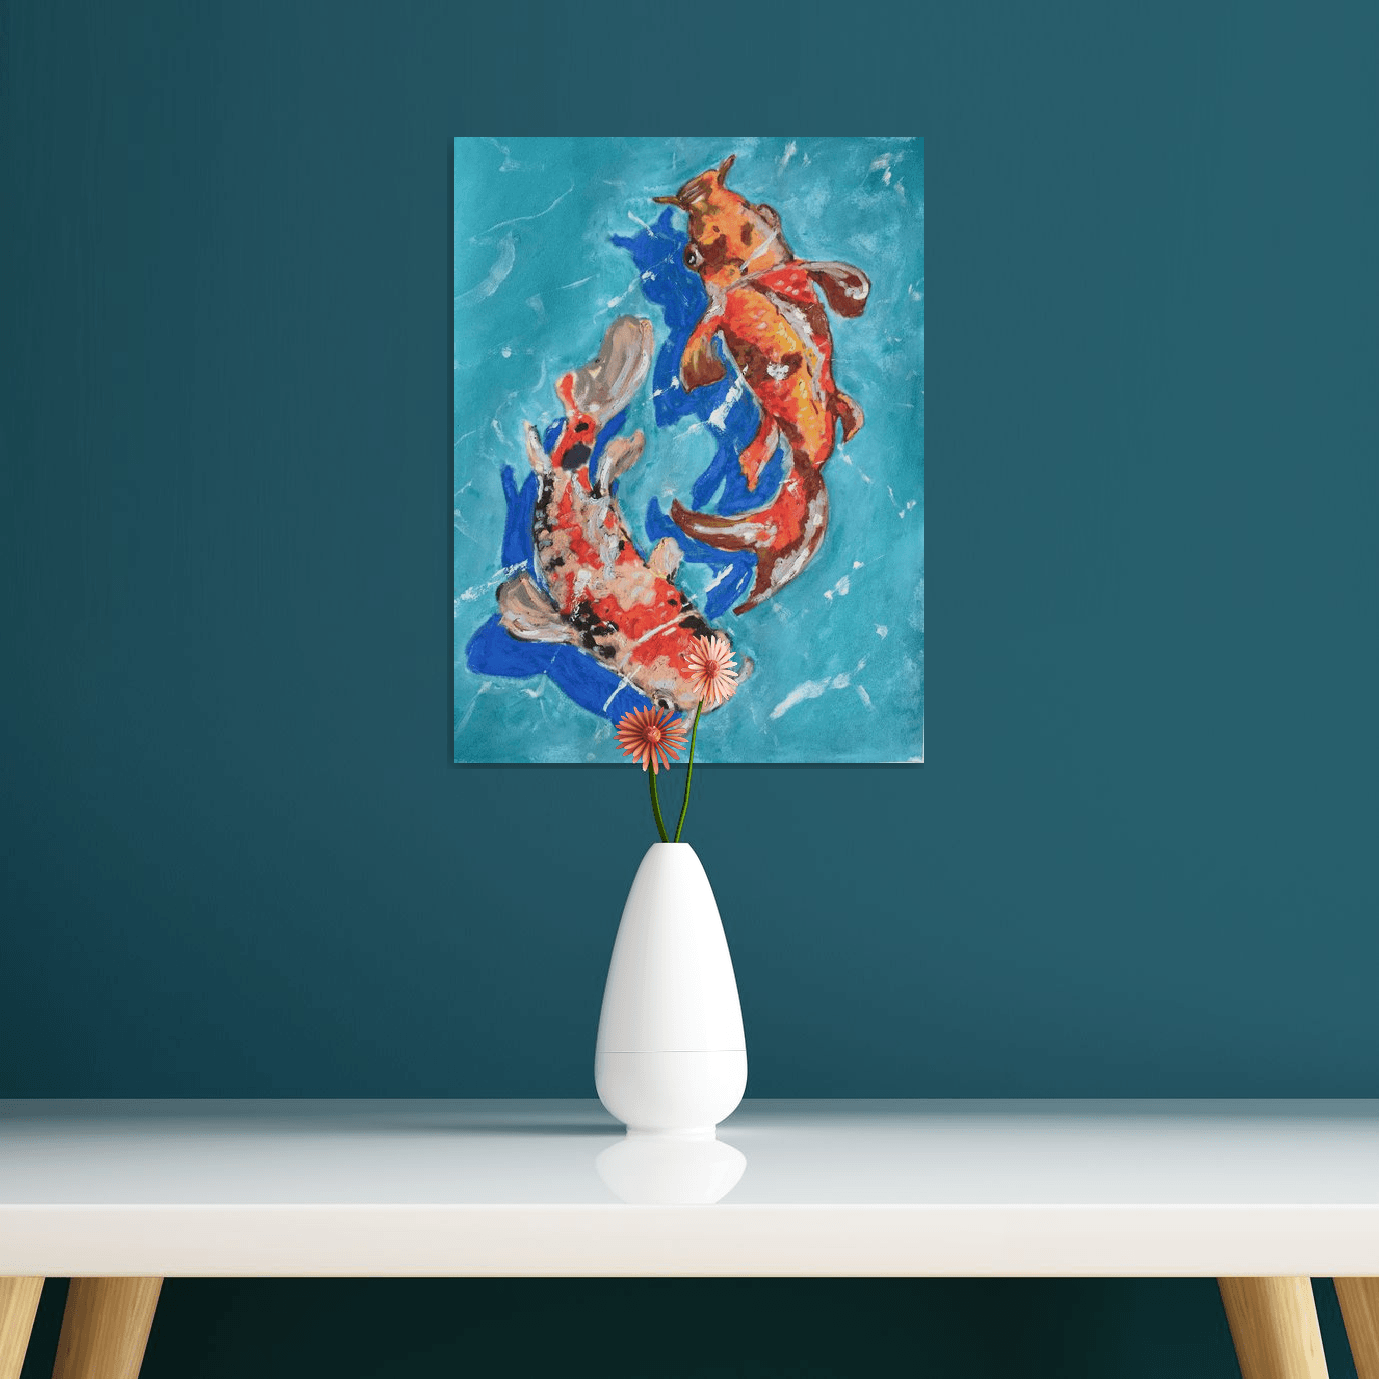 Watercolour Painting Mermaids Rainbow Fish Plants Fabric by Japanese Indie  - modeS4u